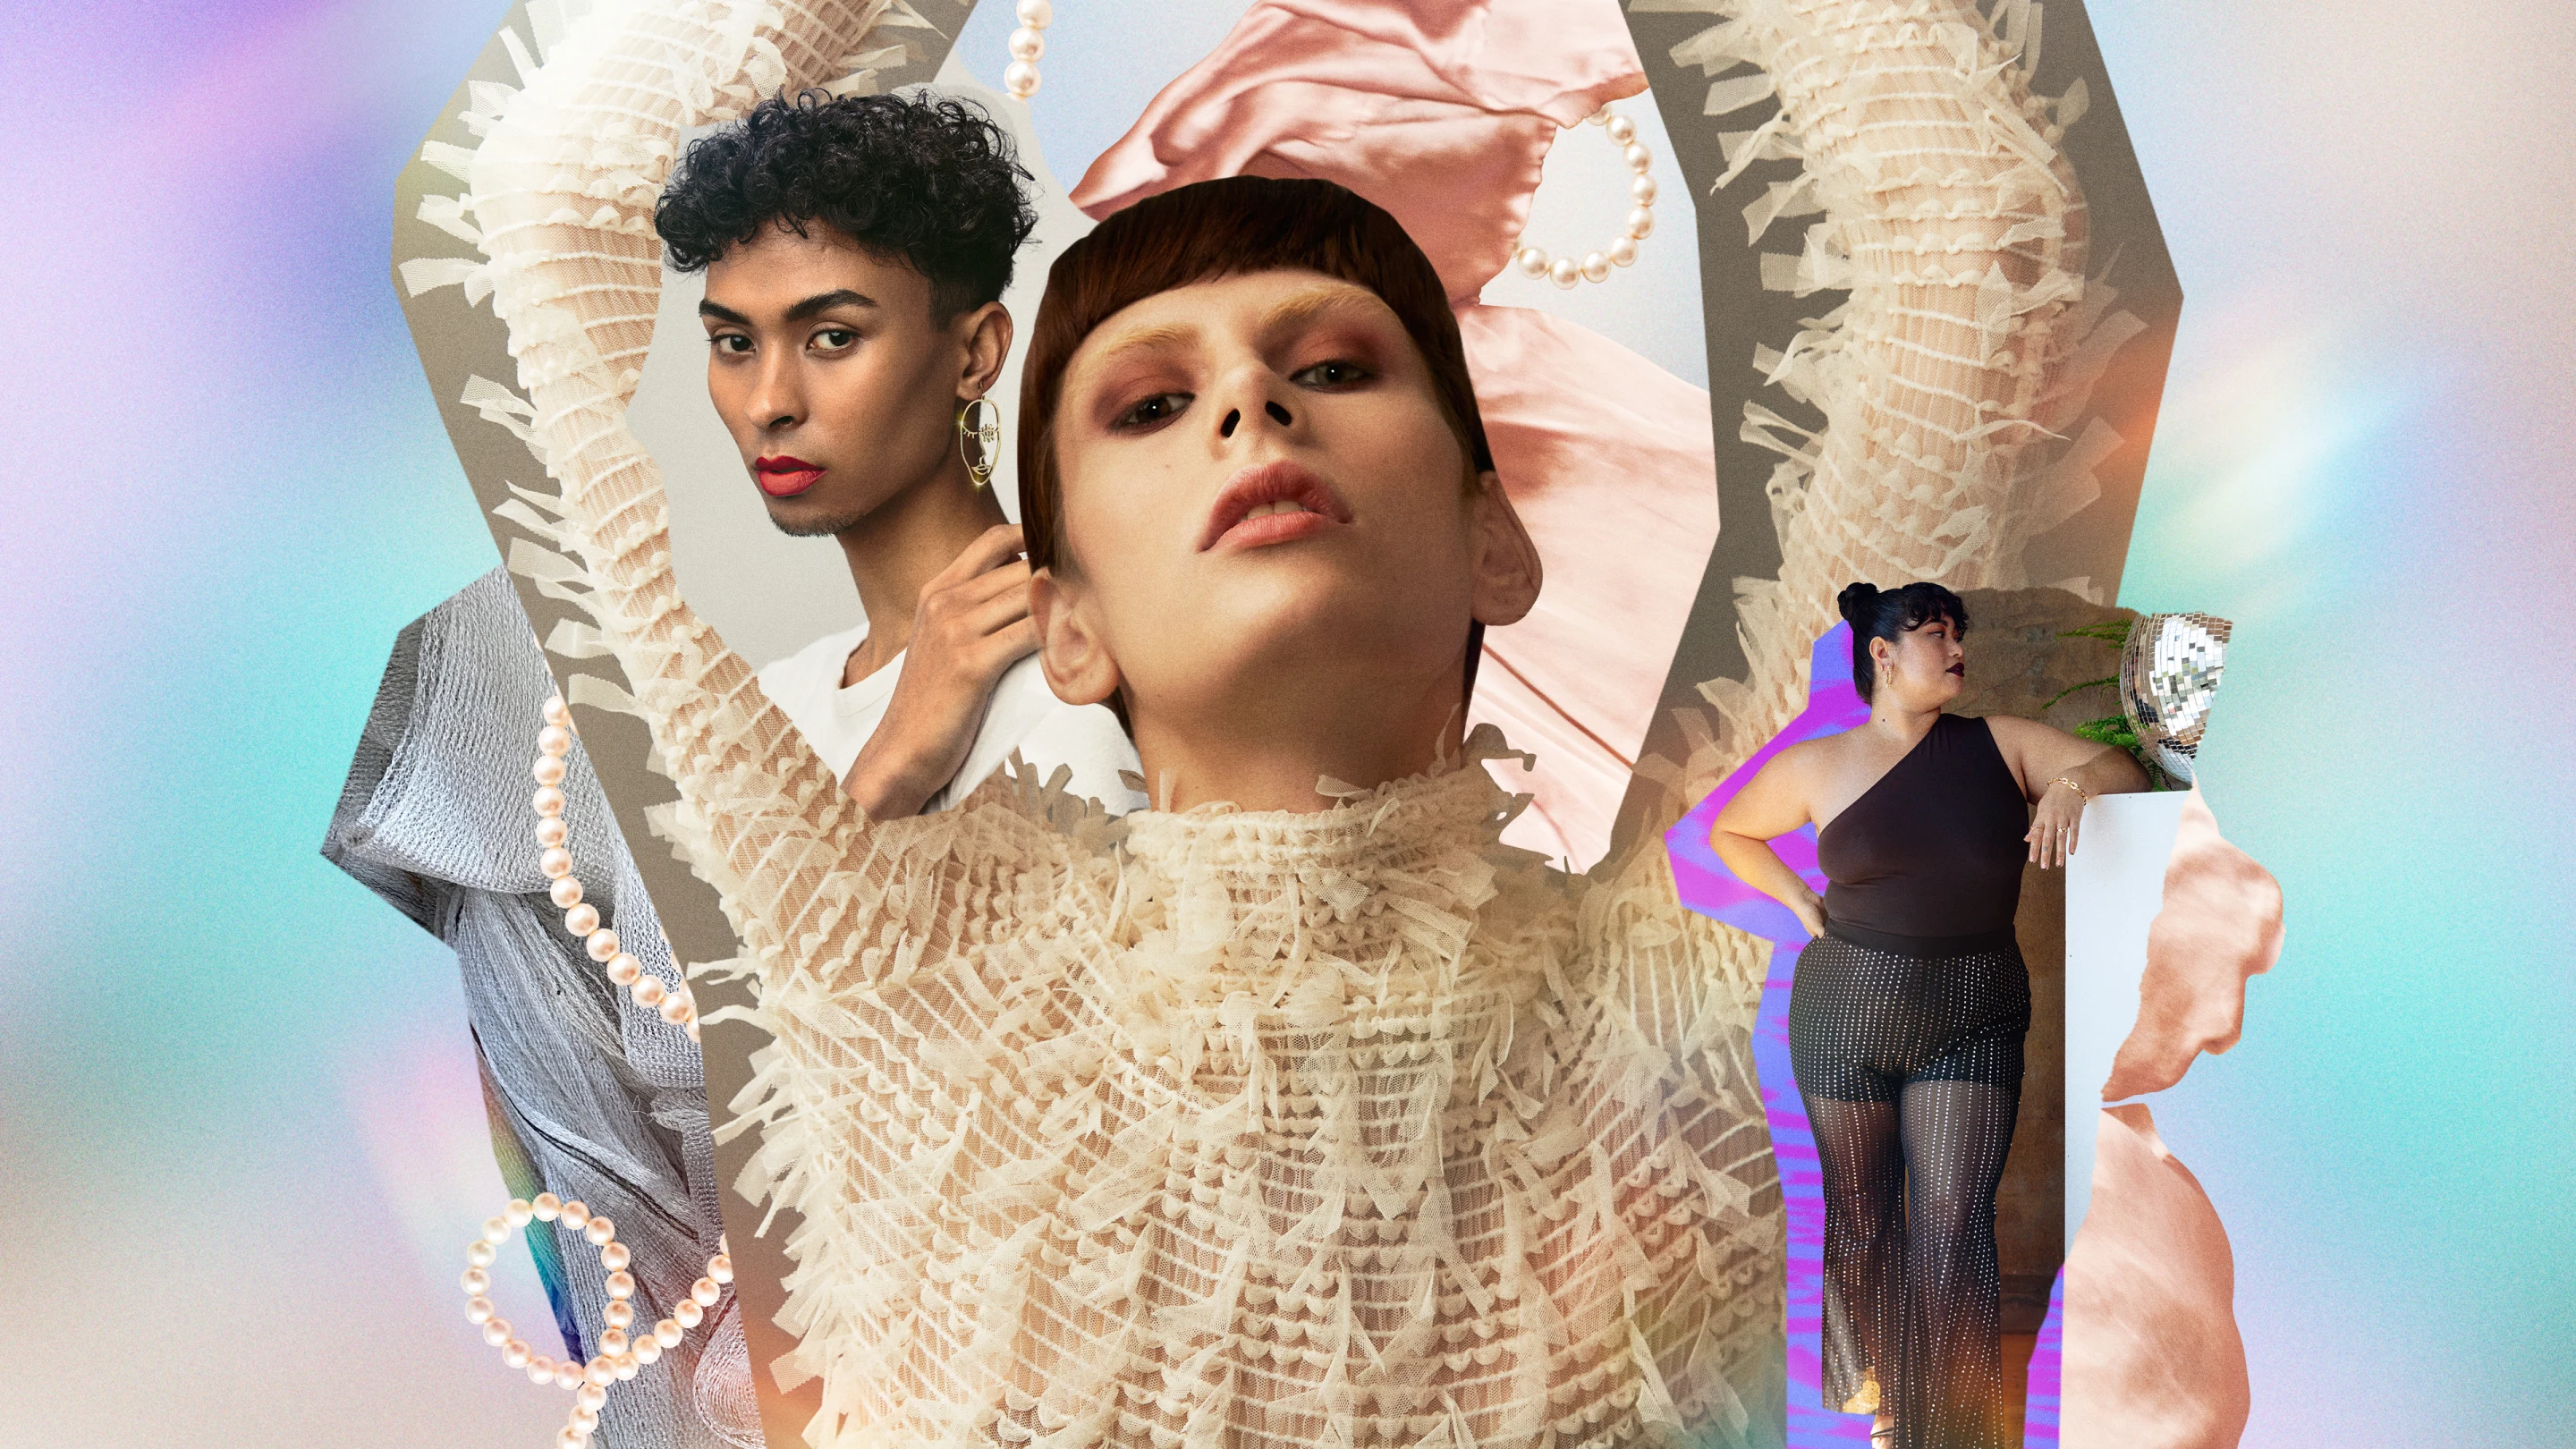 Collage etéreo que presenta a tres personas de varias razas e identidades de género adornadas con ropa sensual, brillante, fluida y agnóstica de género.